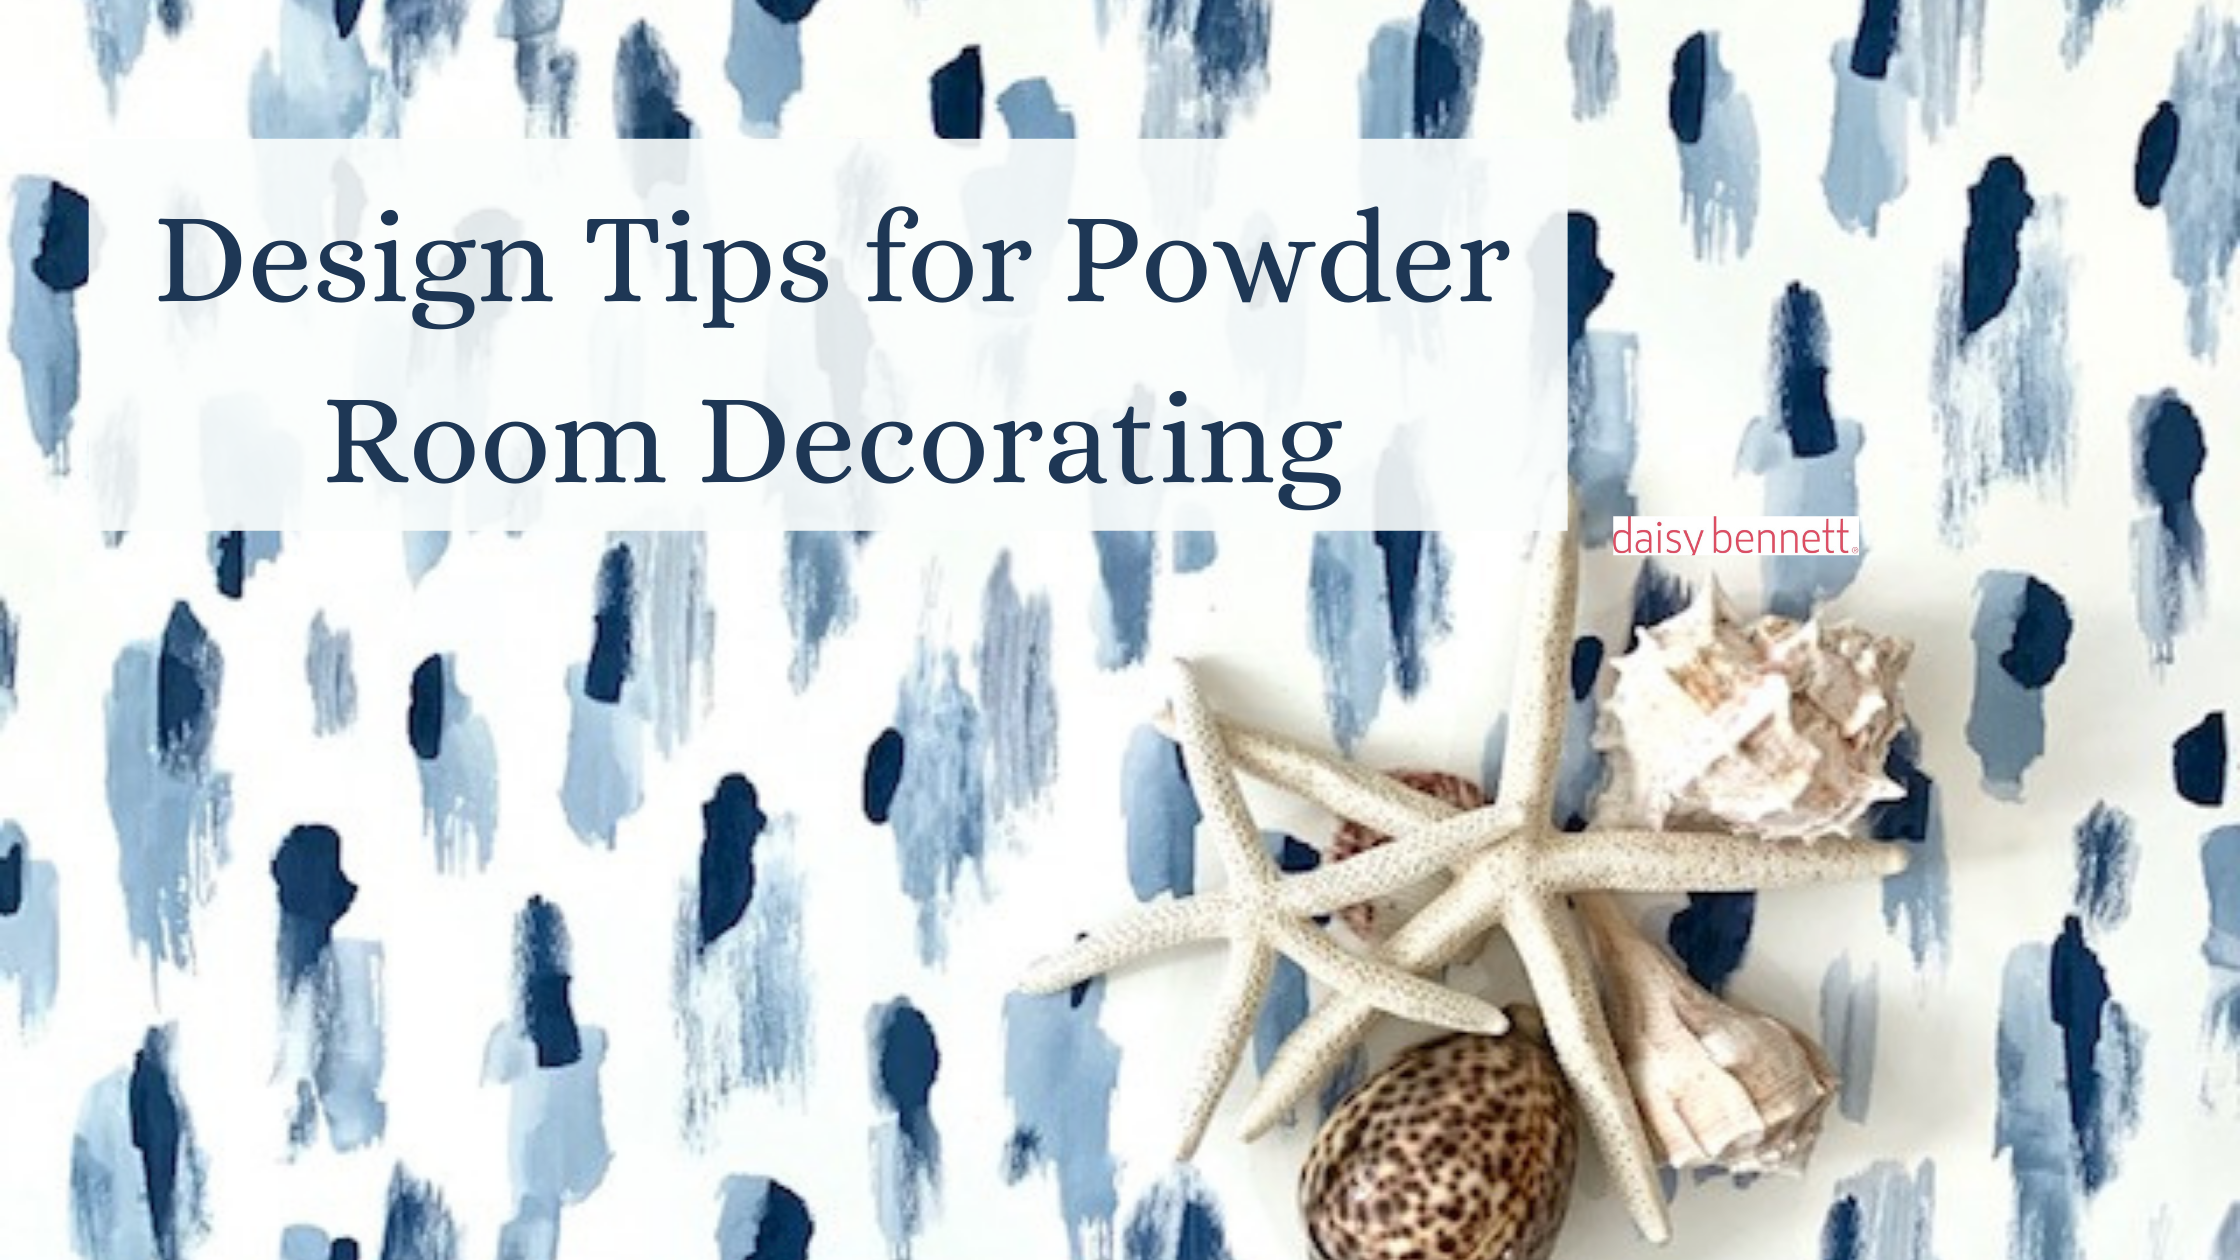 leopard print wallpaper - design tips for powder room decorating